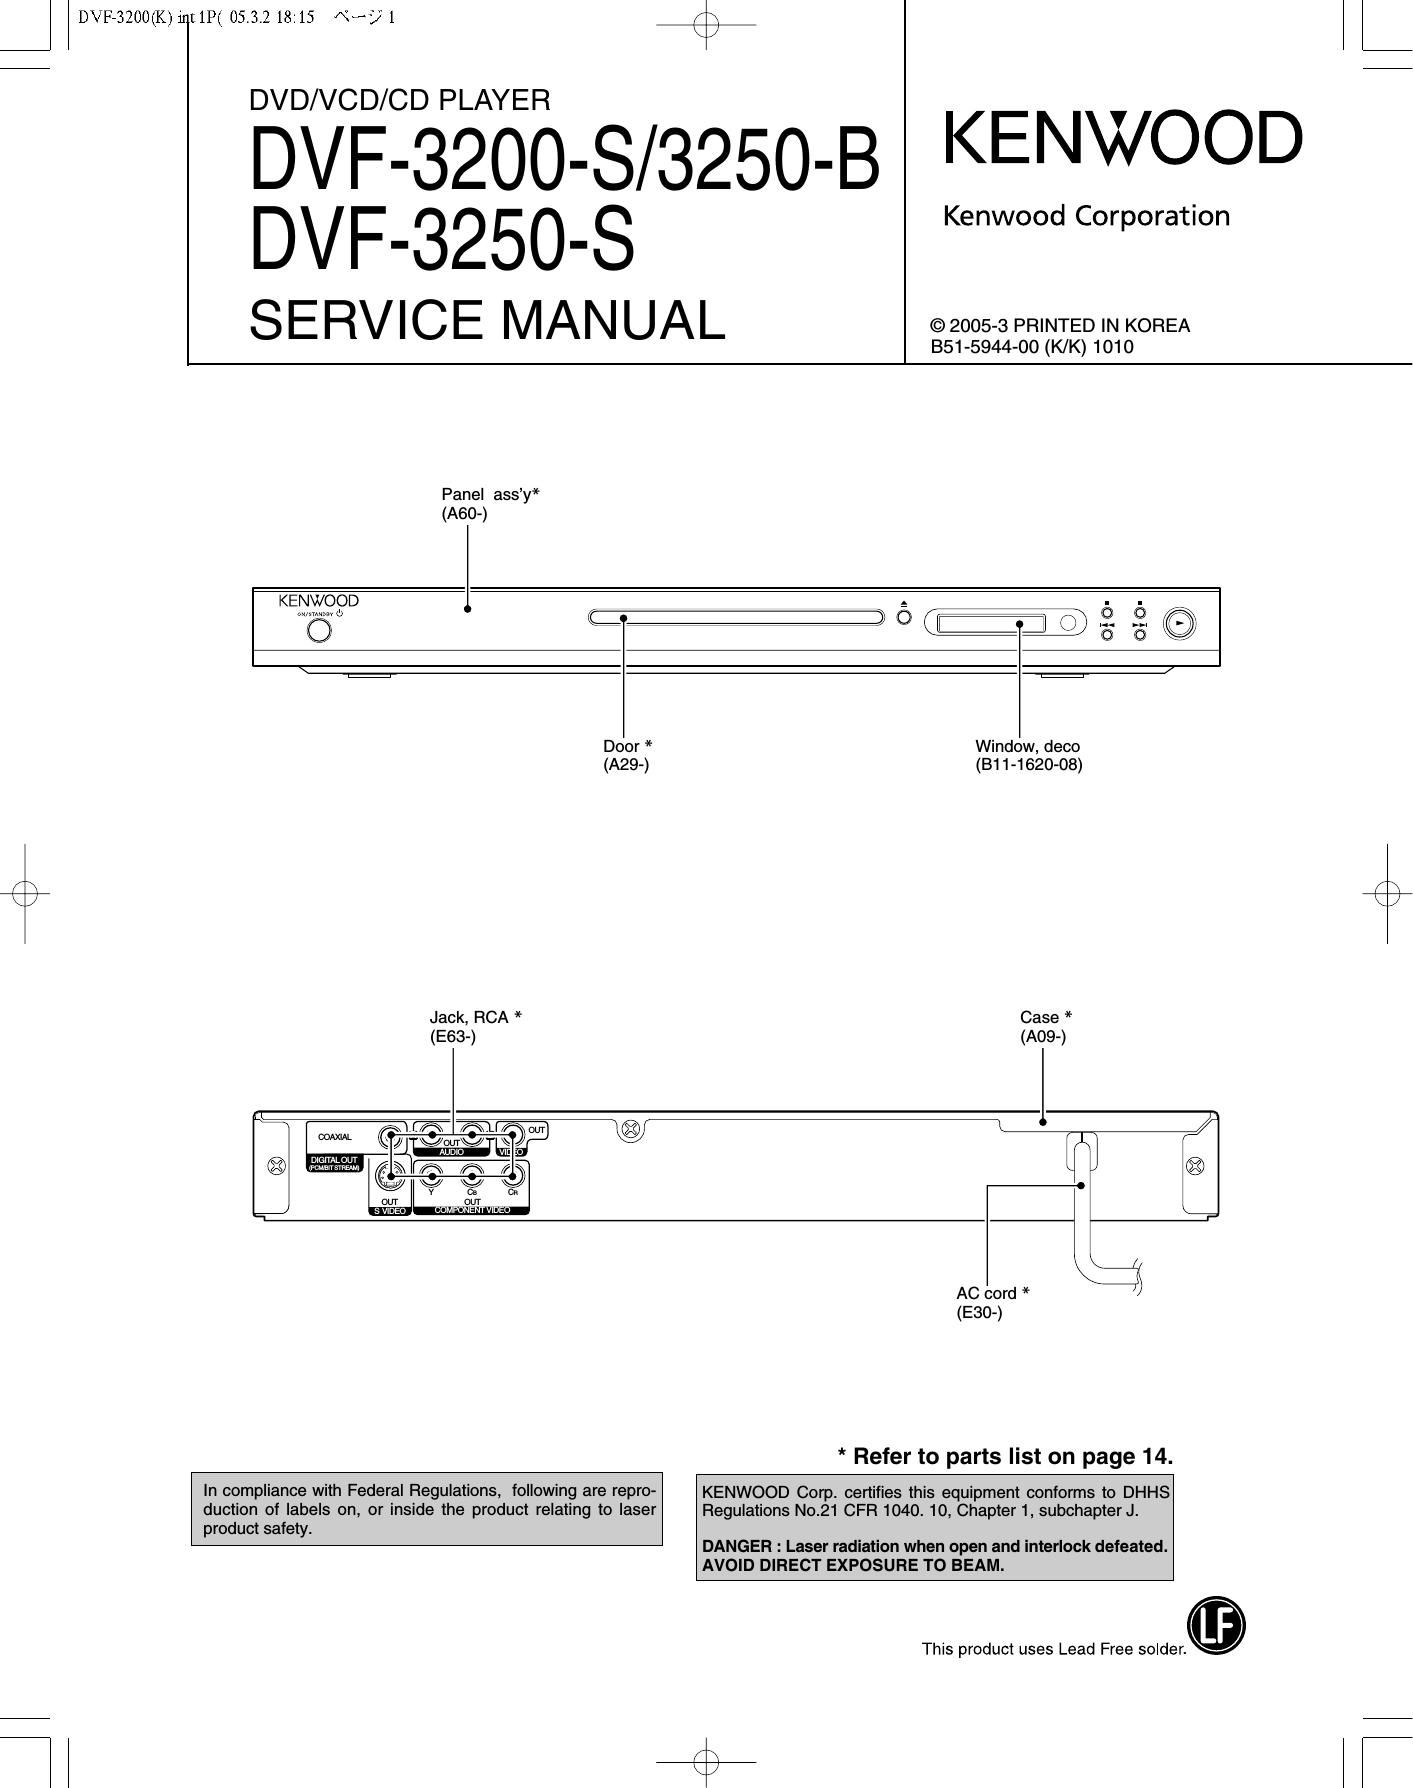 Kenwood DVF 3200 S Service Manual